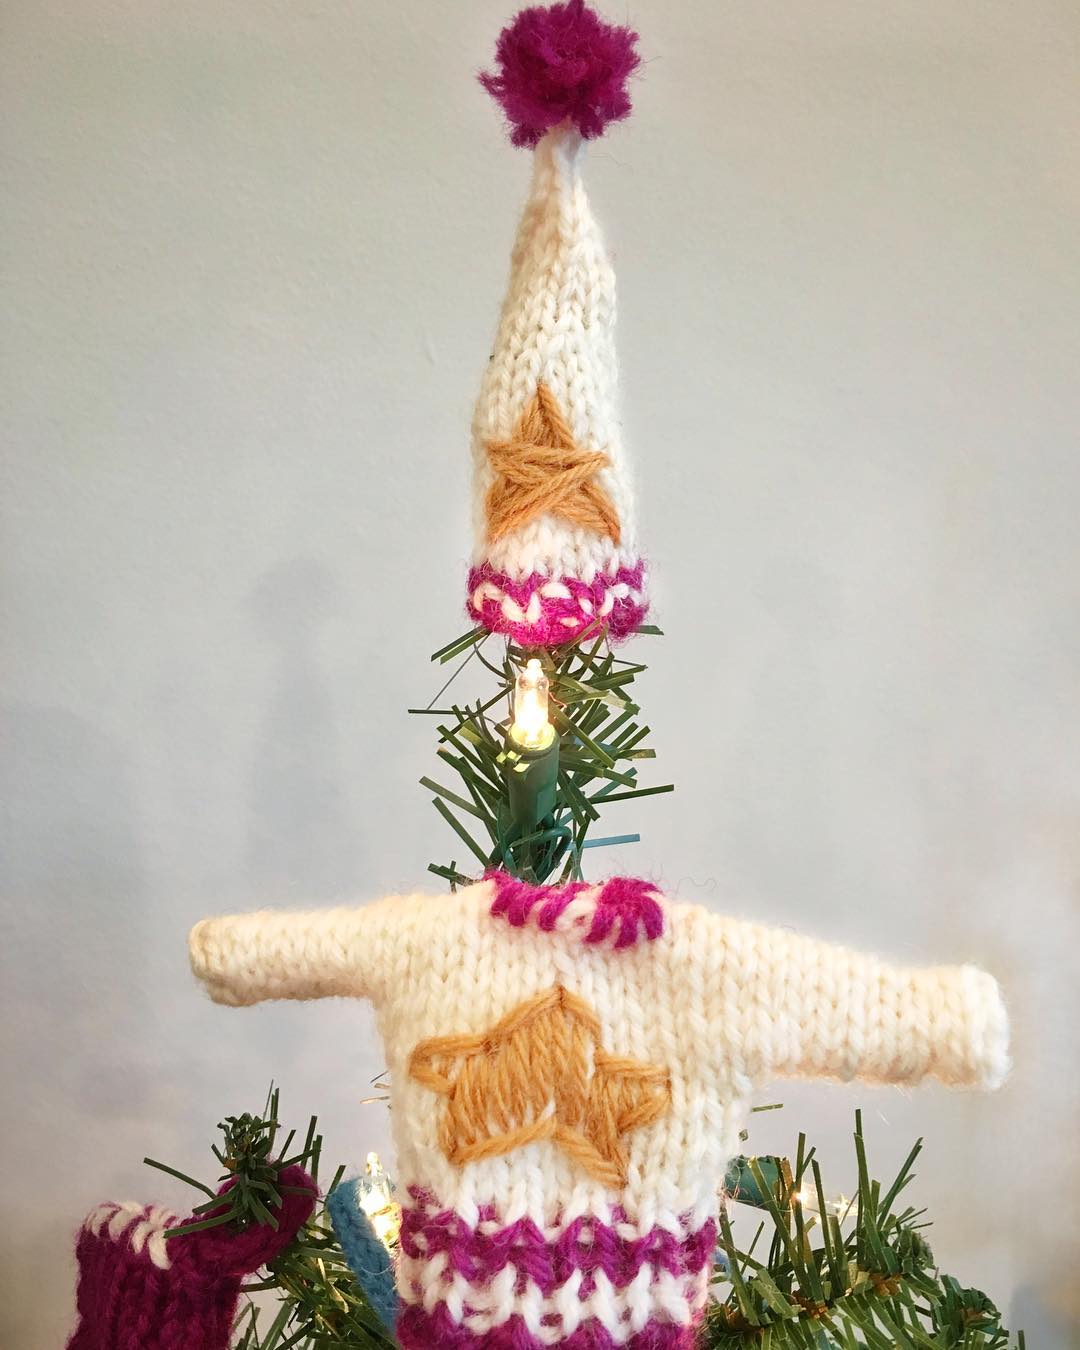 Mini handknit stocking cap & sweater set as tree topper.